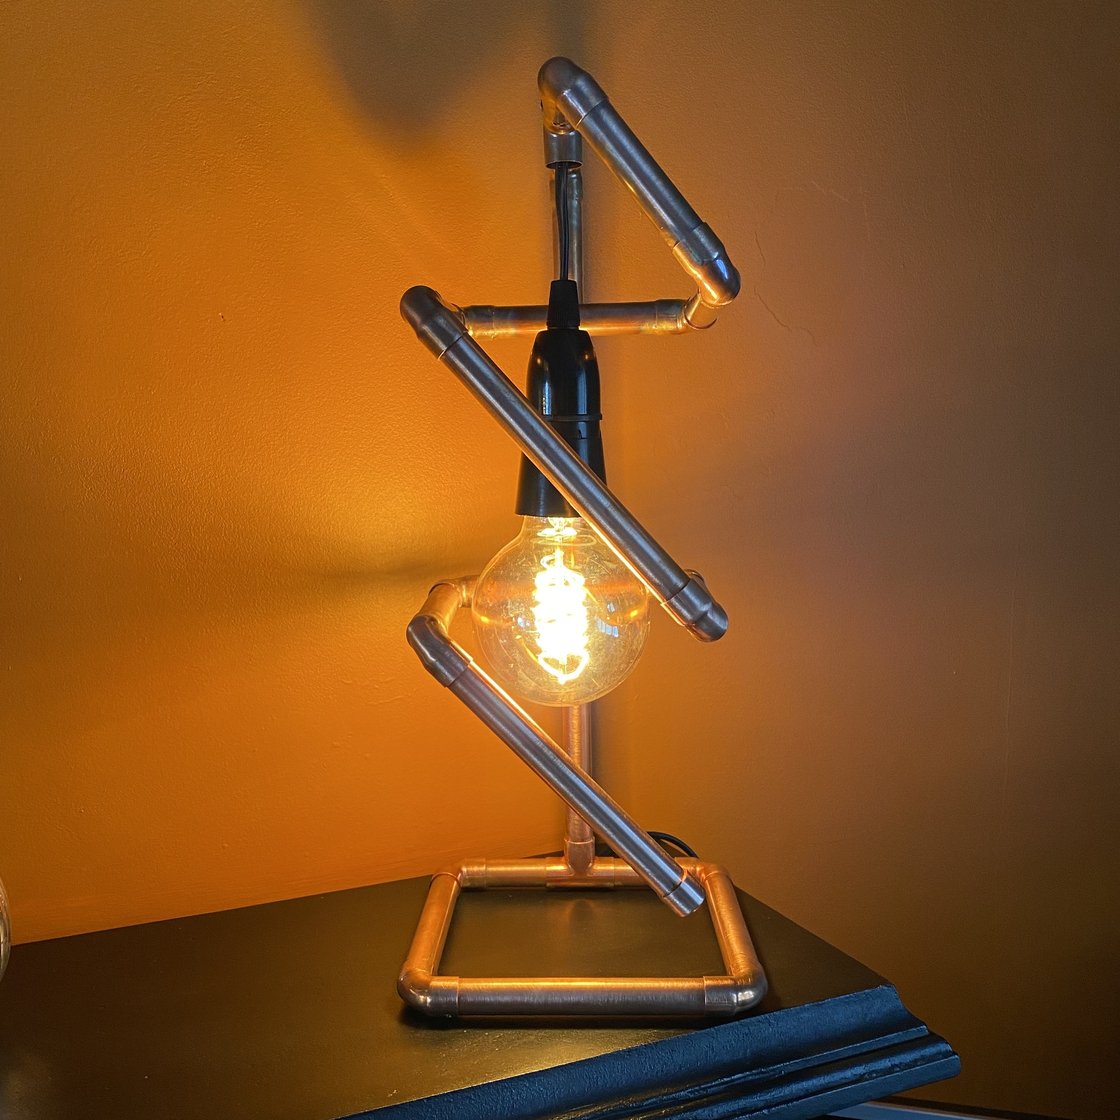 Handcrafted Industrial Reclaimed Copper Pipe Table Lamp, Industrial Design Homeware, Urban Industrial Lighting, Unique Desk Lamp Lighting